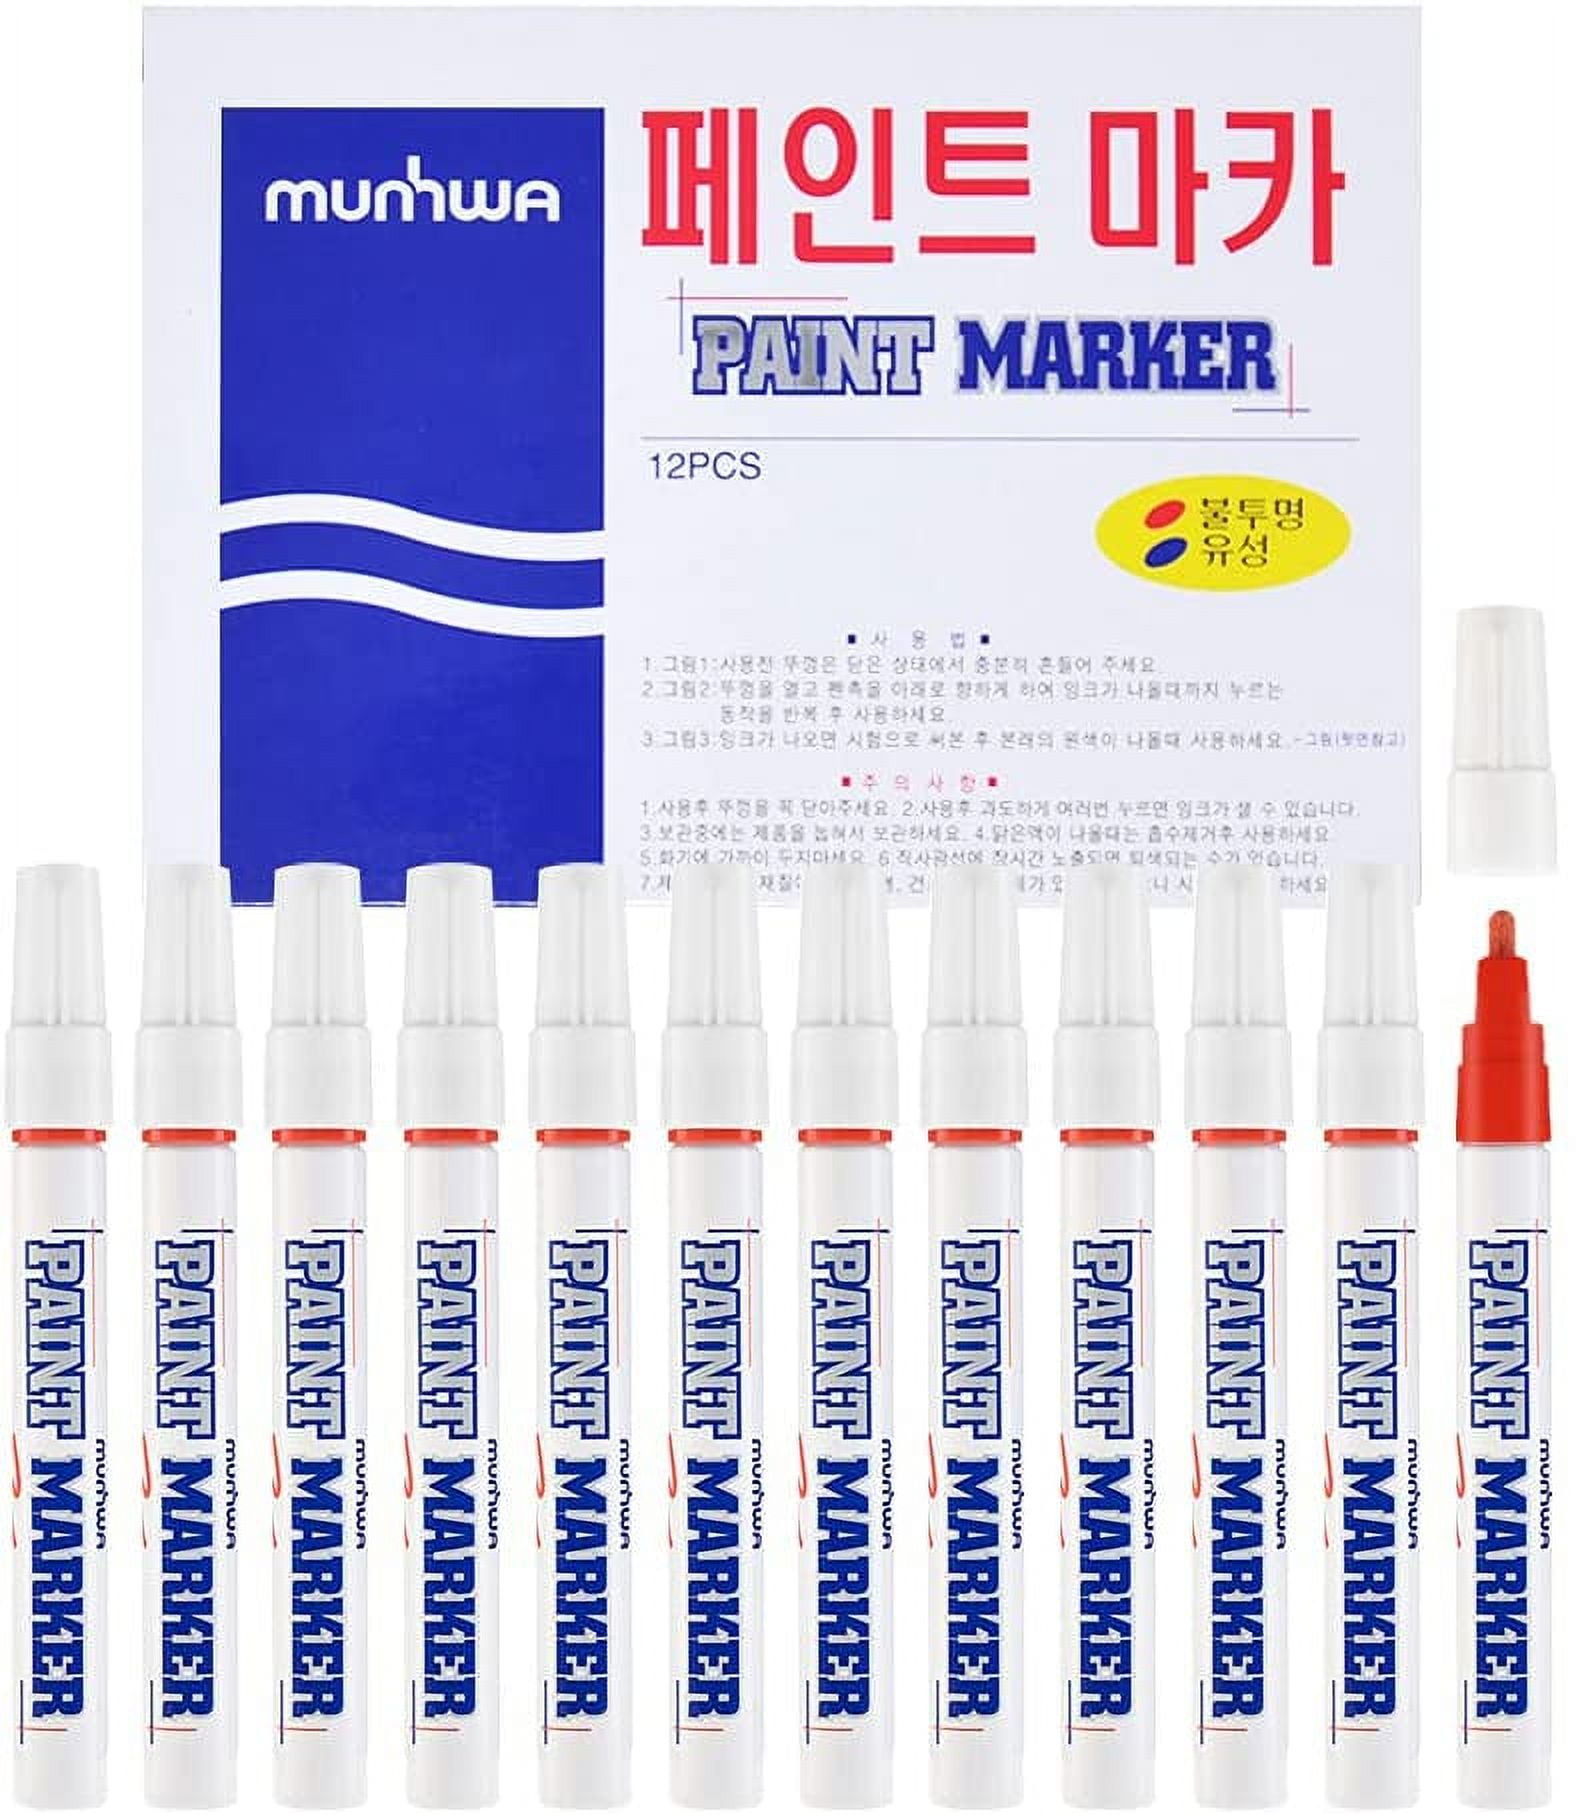 Permanent Paint Pens Paint Markers for Plastic Metal - 8 Colors Oil Based